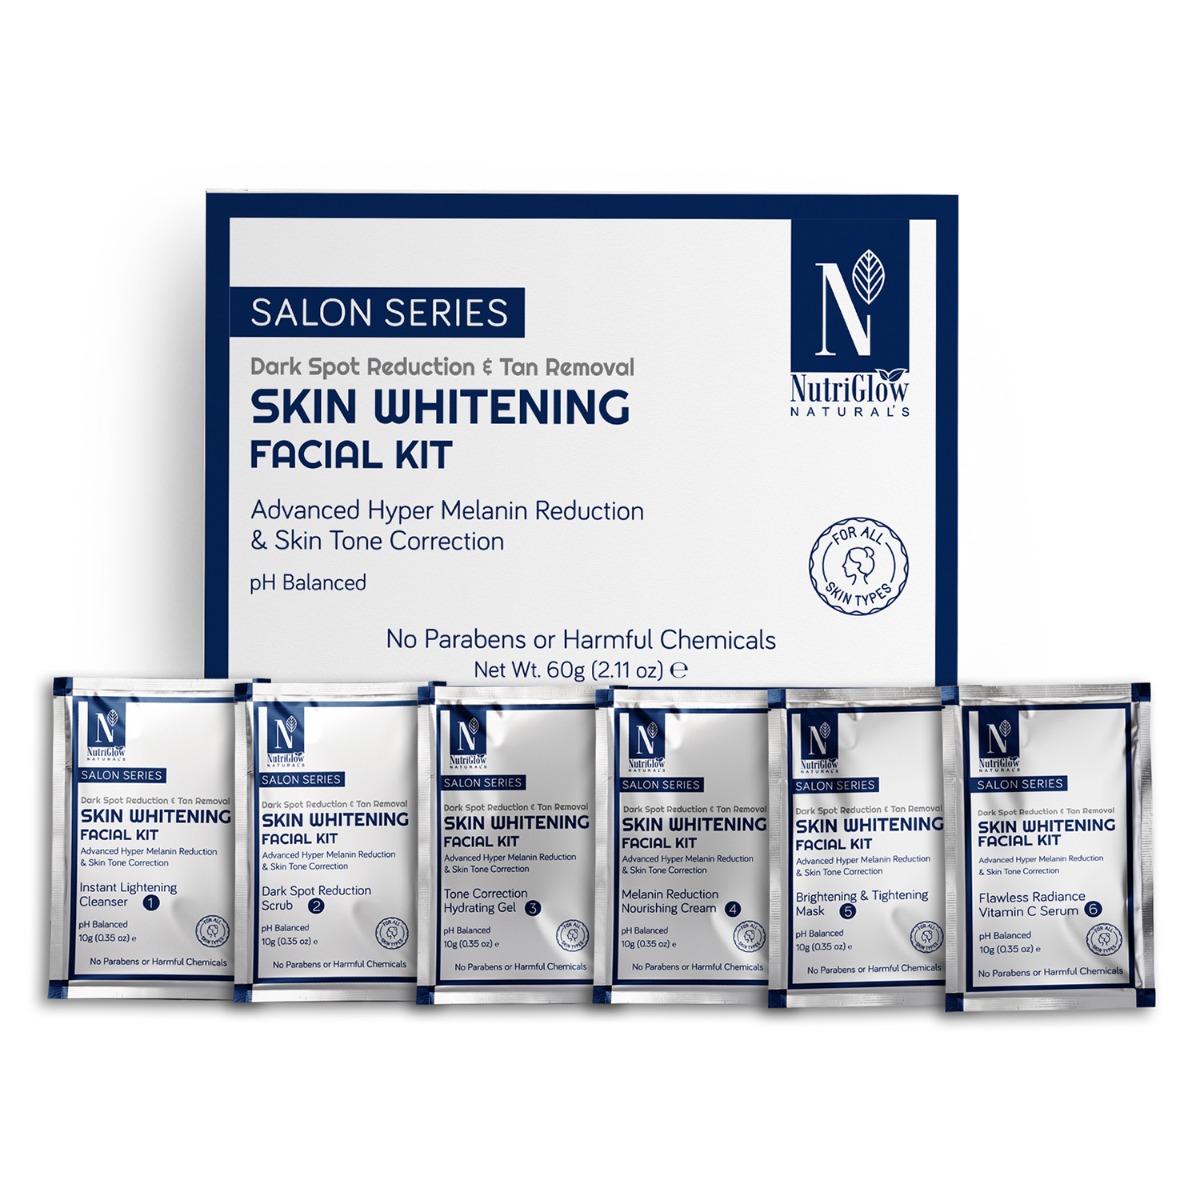 NutriGlow Natural's Salon Series Skin Whitening Facial Kit, 10gm Each